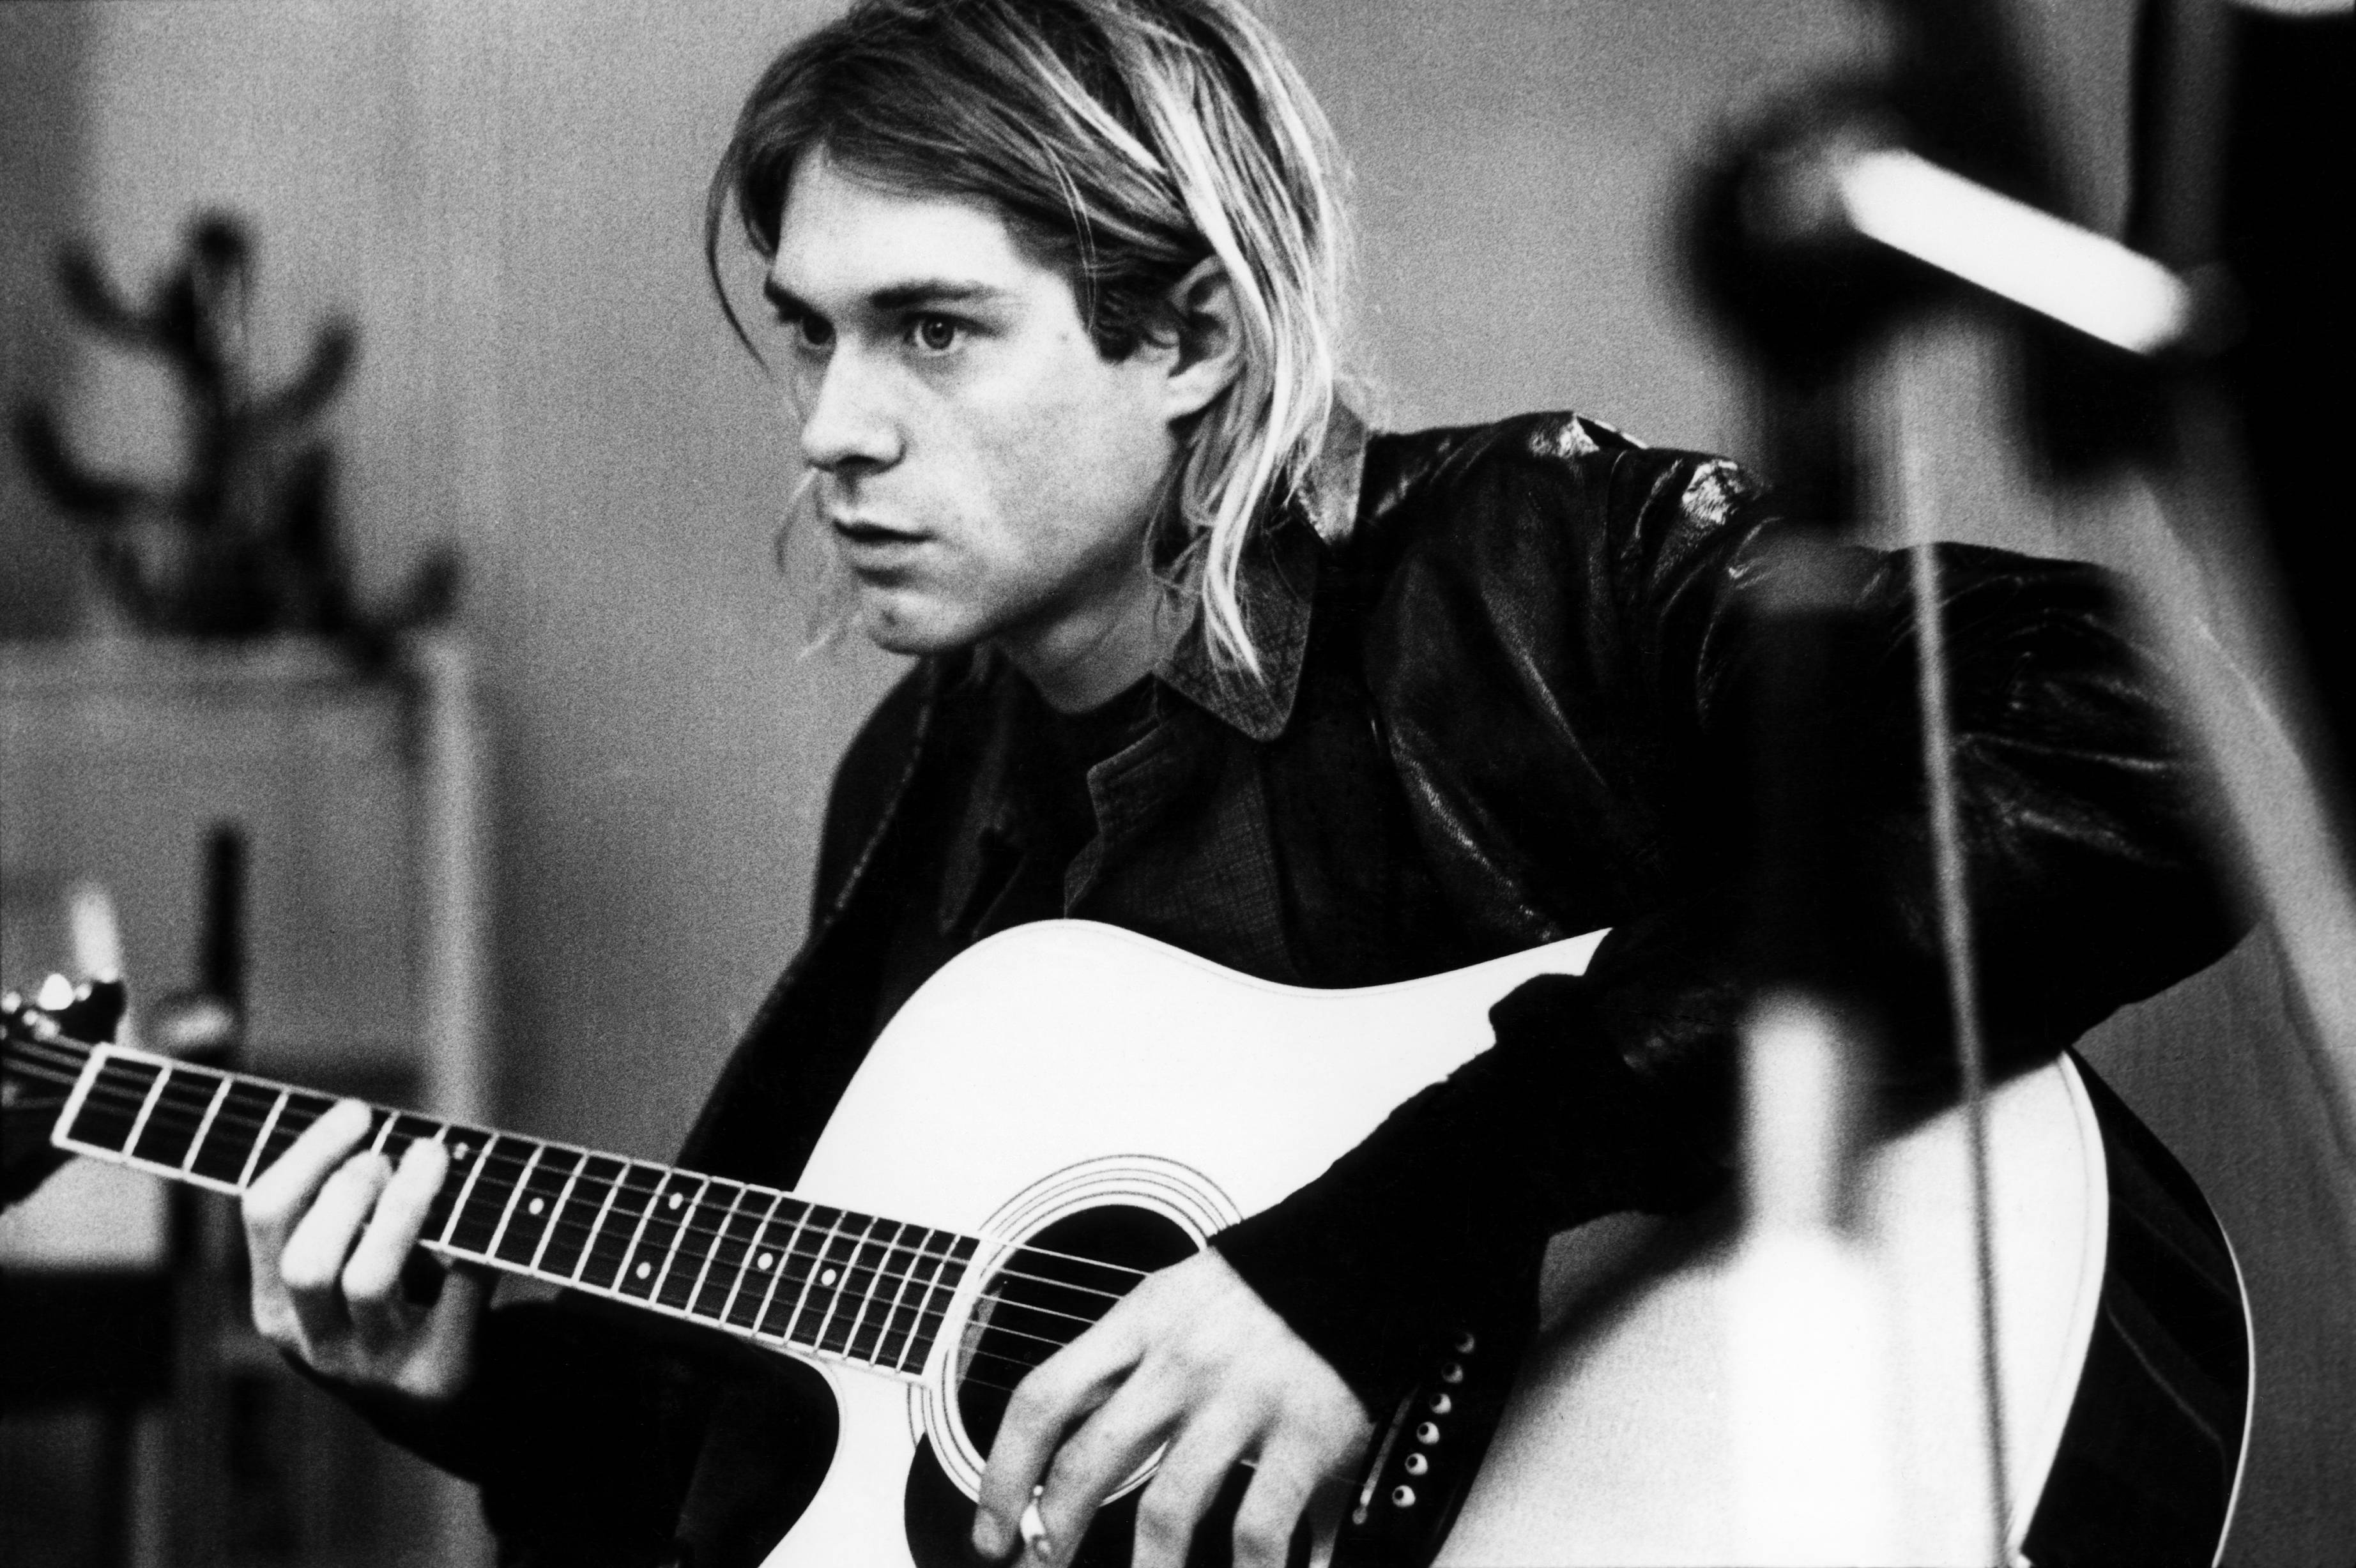 Nirvana's Kurt Cobain holding a guitar